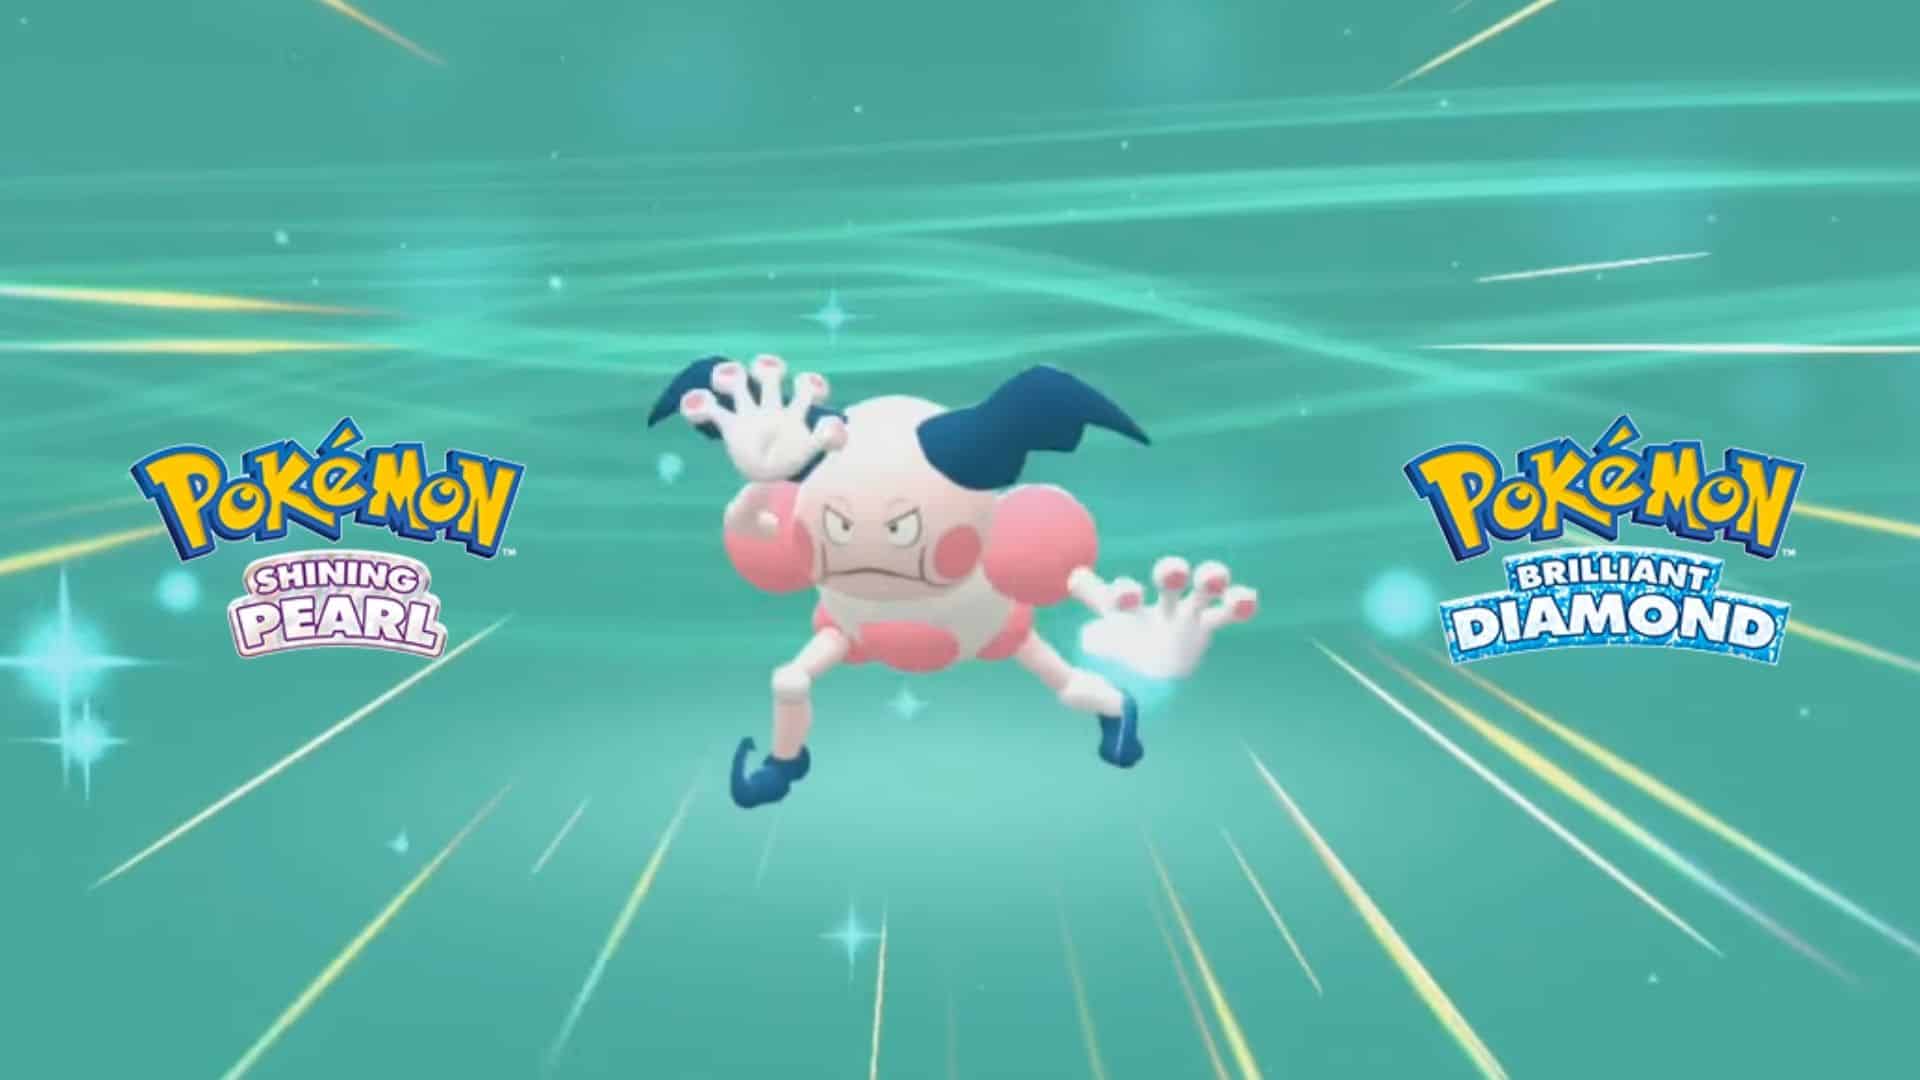 Pokémon GO - How to Evolve Galarian Mr. Mime into Mr. Rime